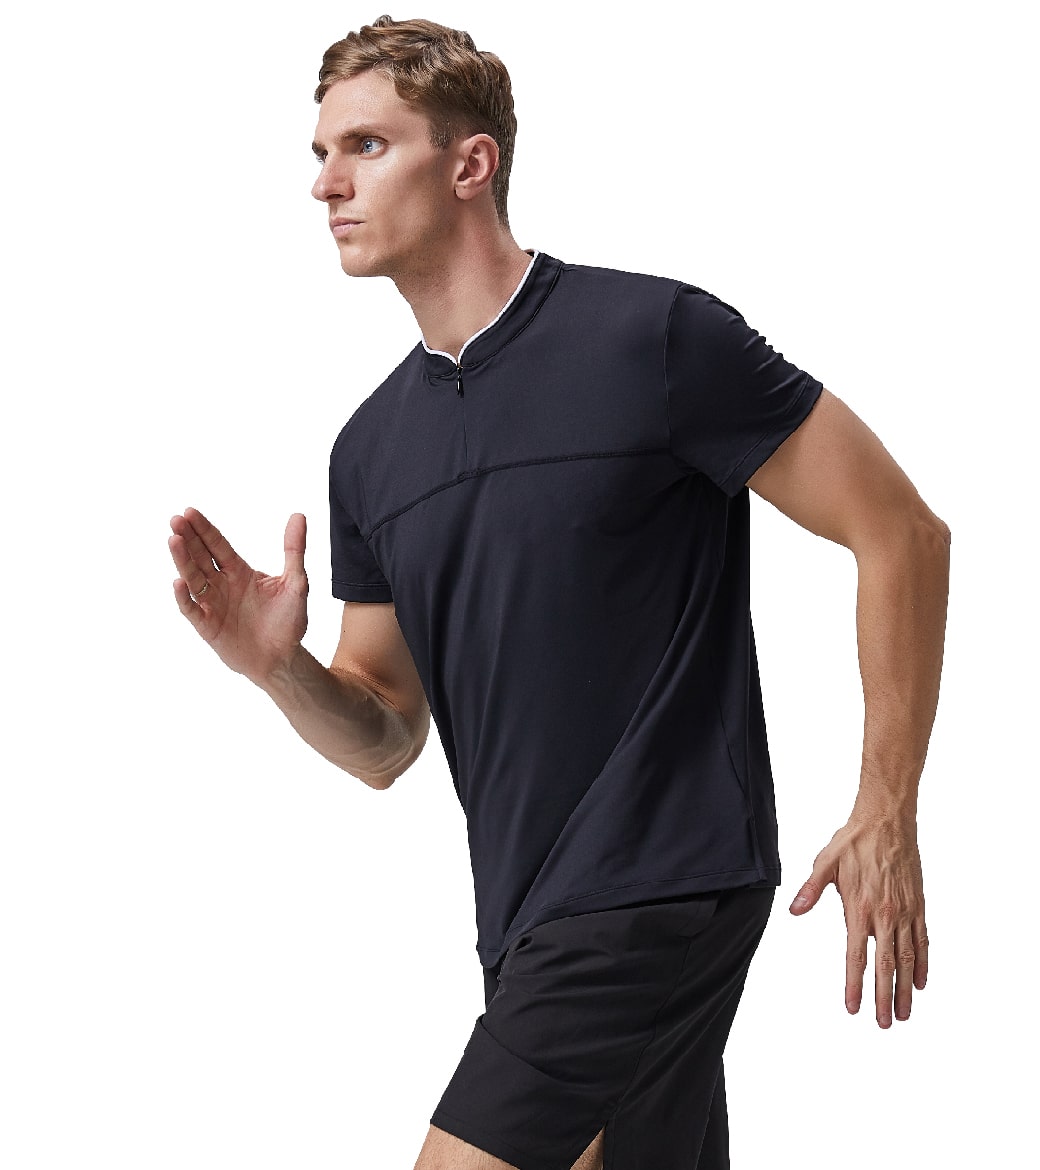 LOVESOFT Men's Fitness Running Yoga T-Shirts